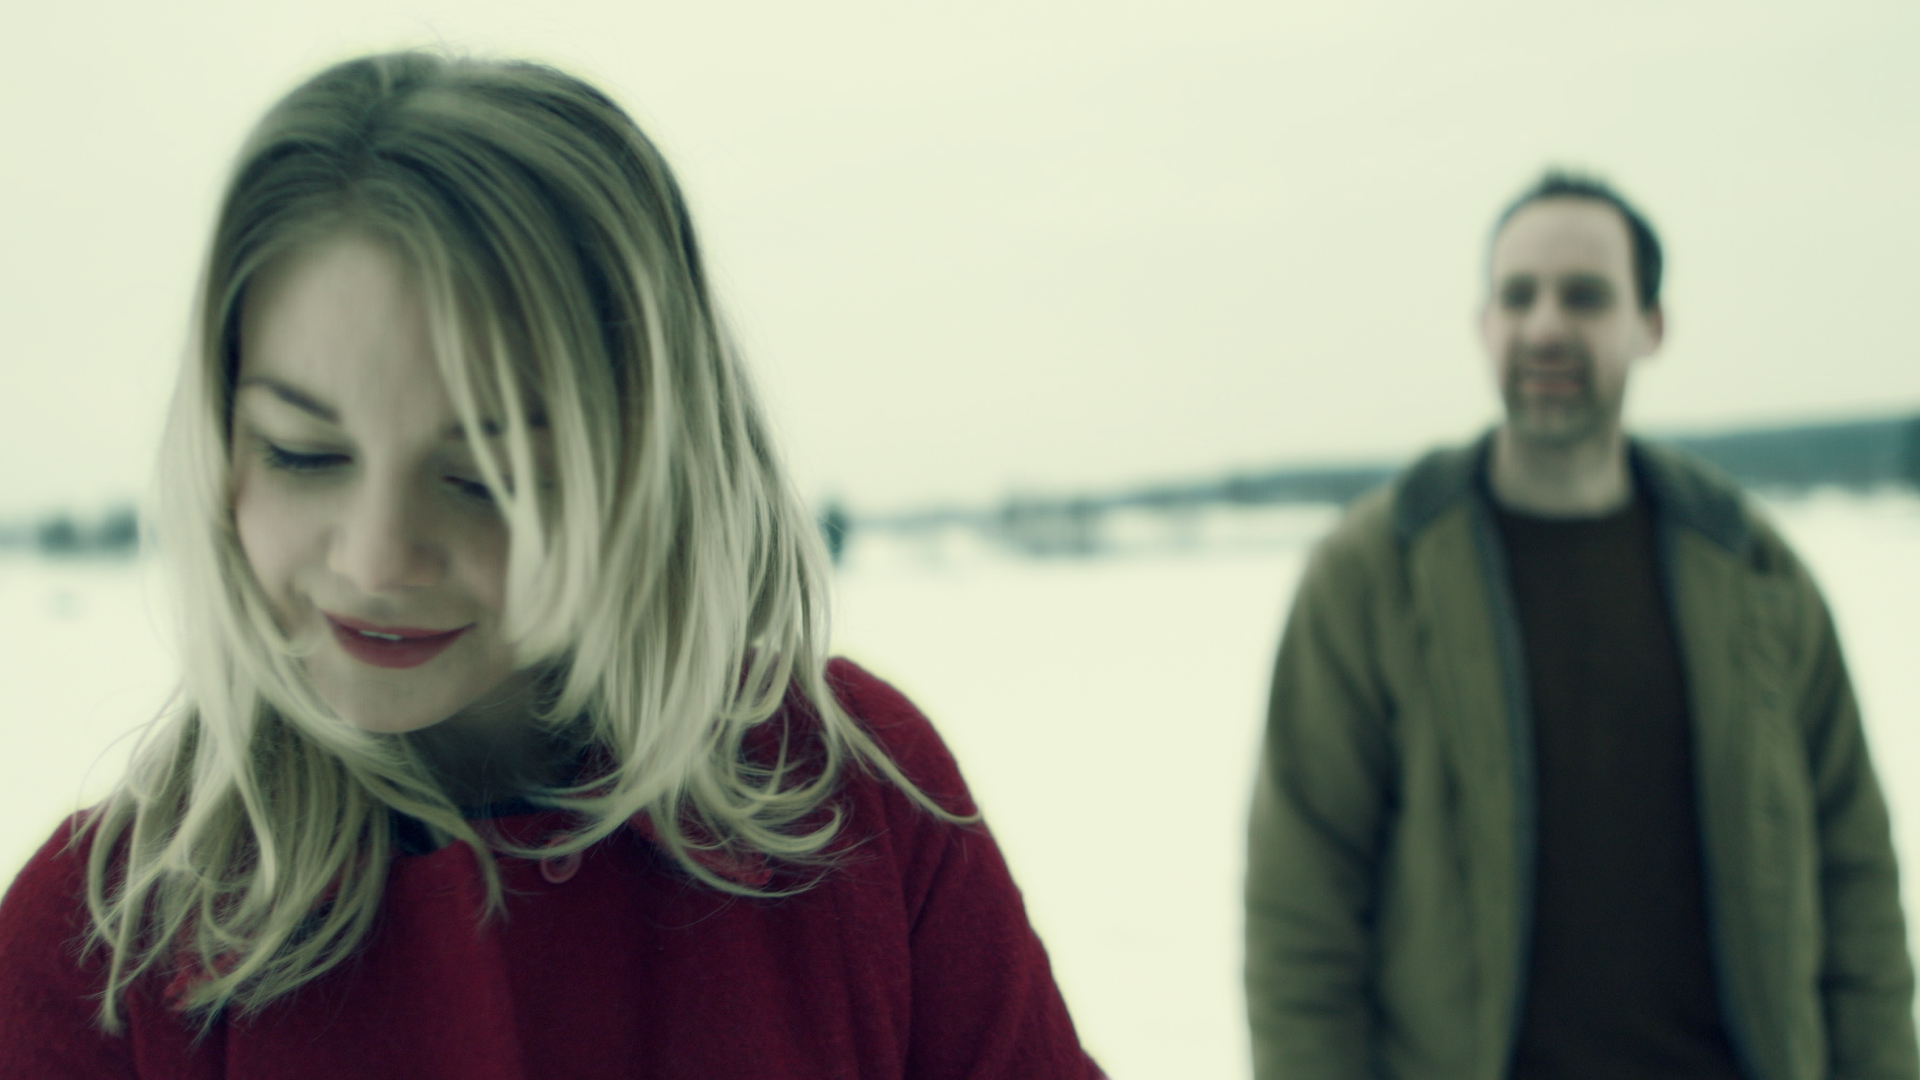 Nordic Noir. The crime drama The Third Eye Season 1. Grade by Dylan Hopkin at Short Cut